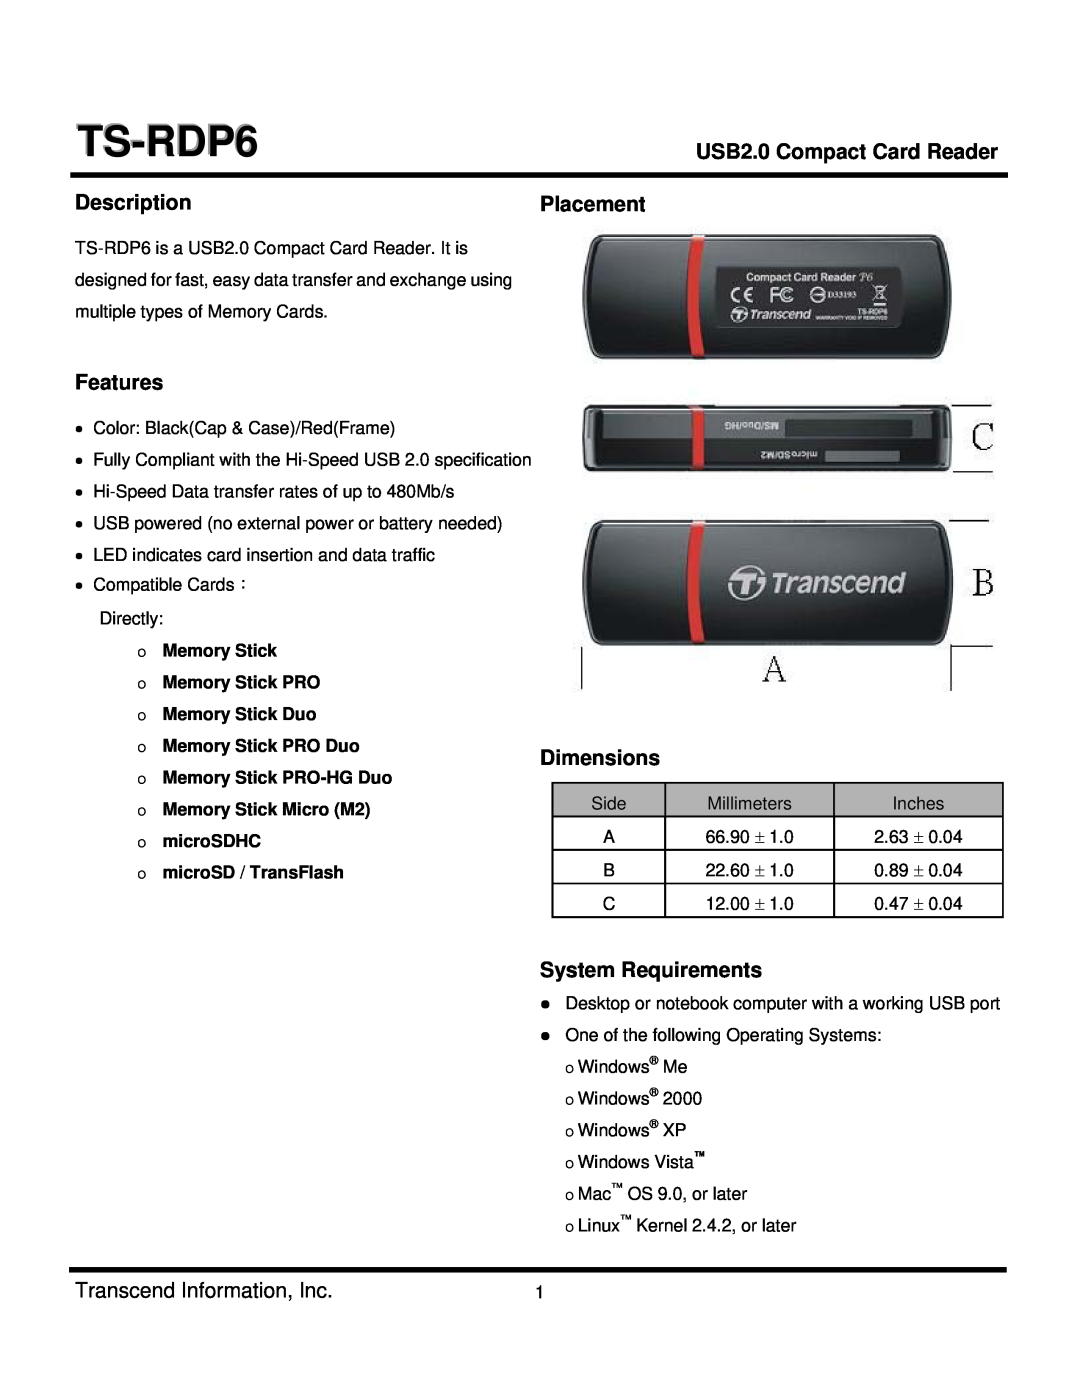 Transcend Information TS-RDP6 dimensions USB2.0 Compact Card Reader, Description, Placement, Features, Dimensions 